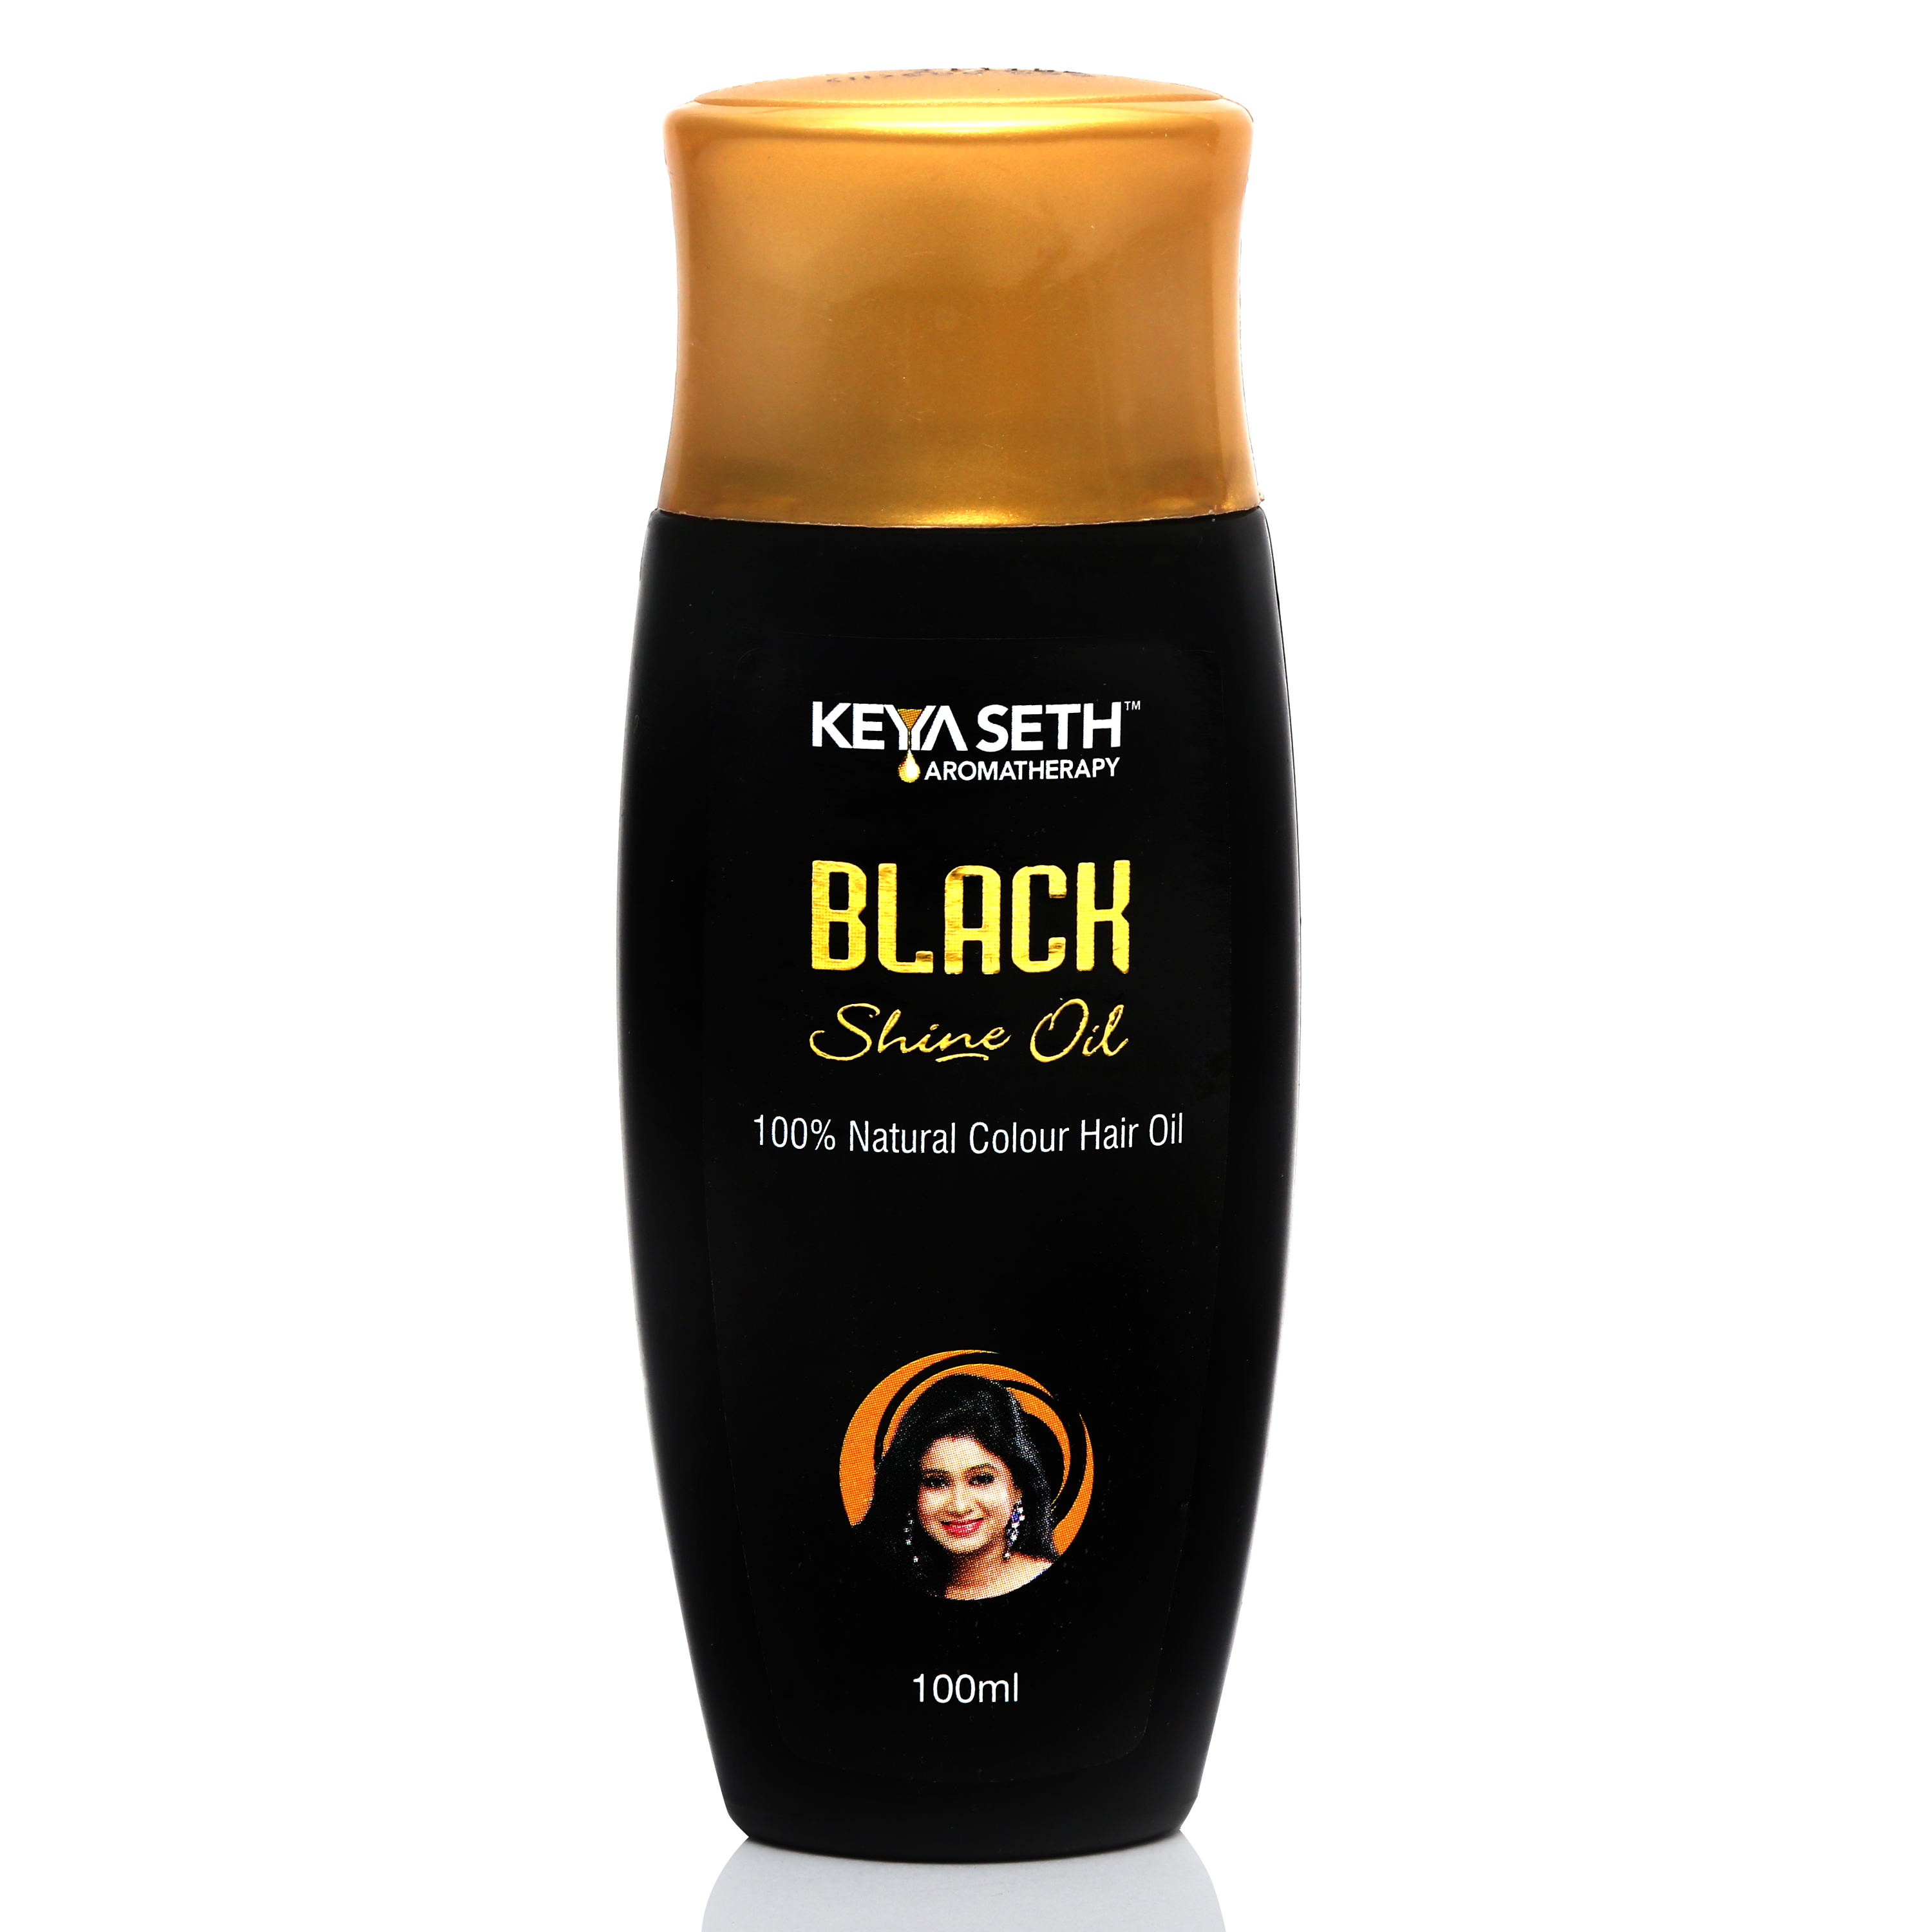 Buy Black Shine Oil 100 Natural Hair Colour Oil By Keya Seth